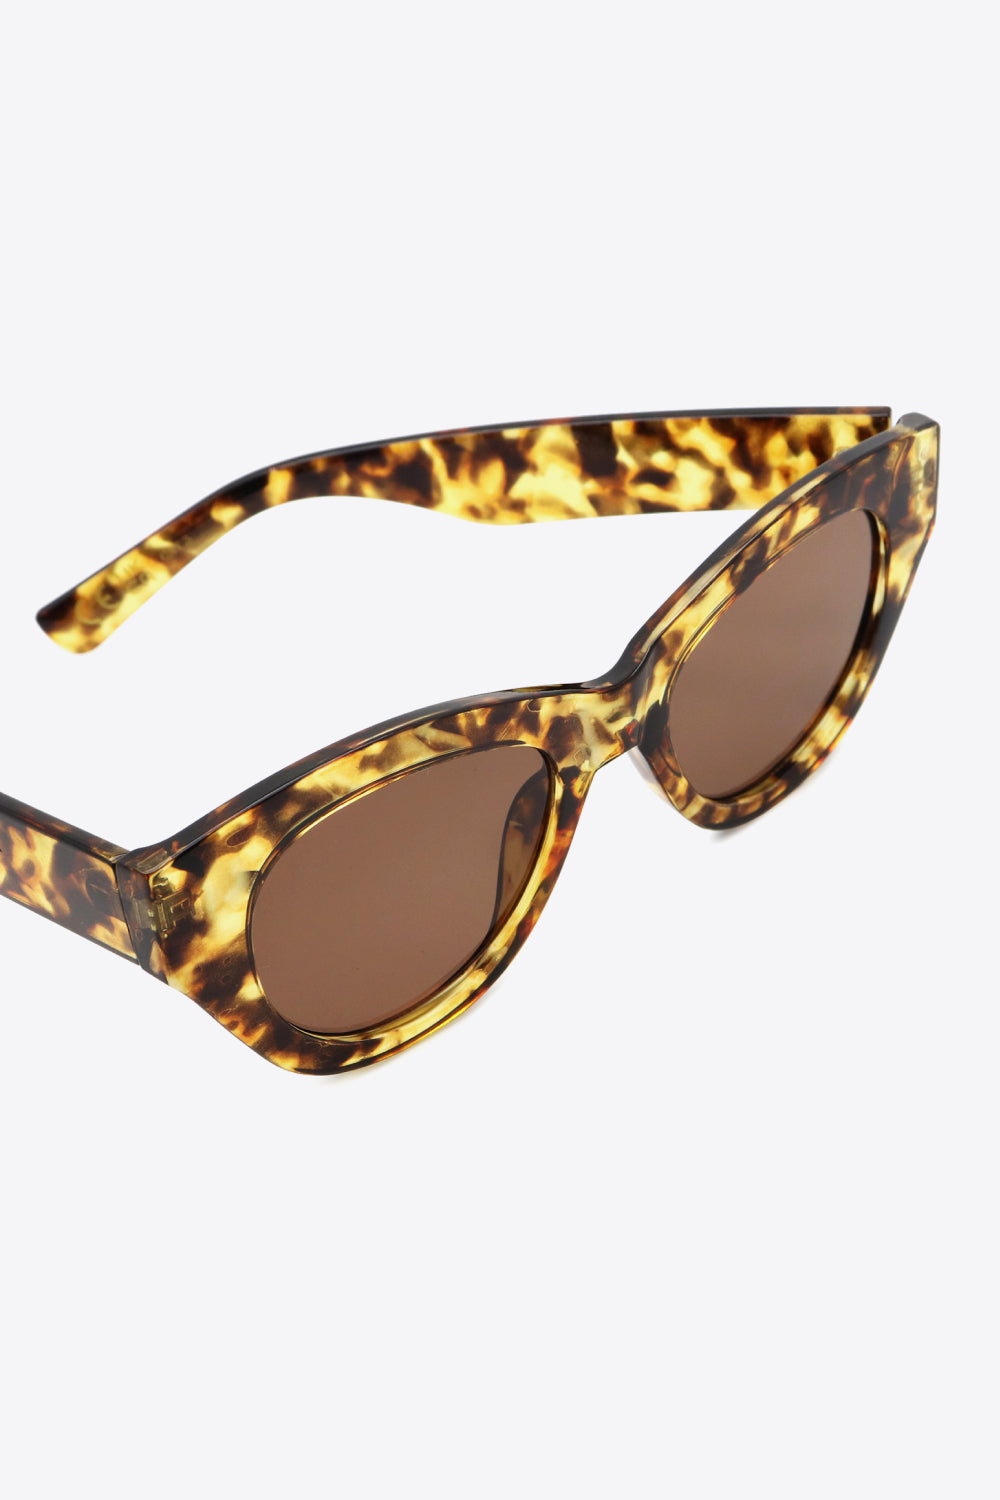 Uylee's Boutique Tortoiseshell Polycarbonate Wayfarer Sunglasses